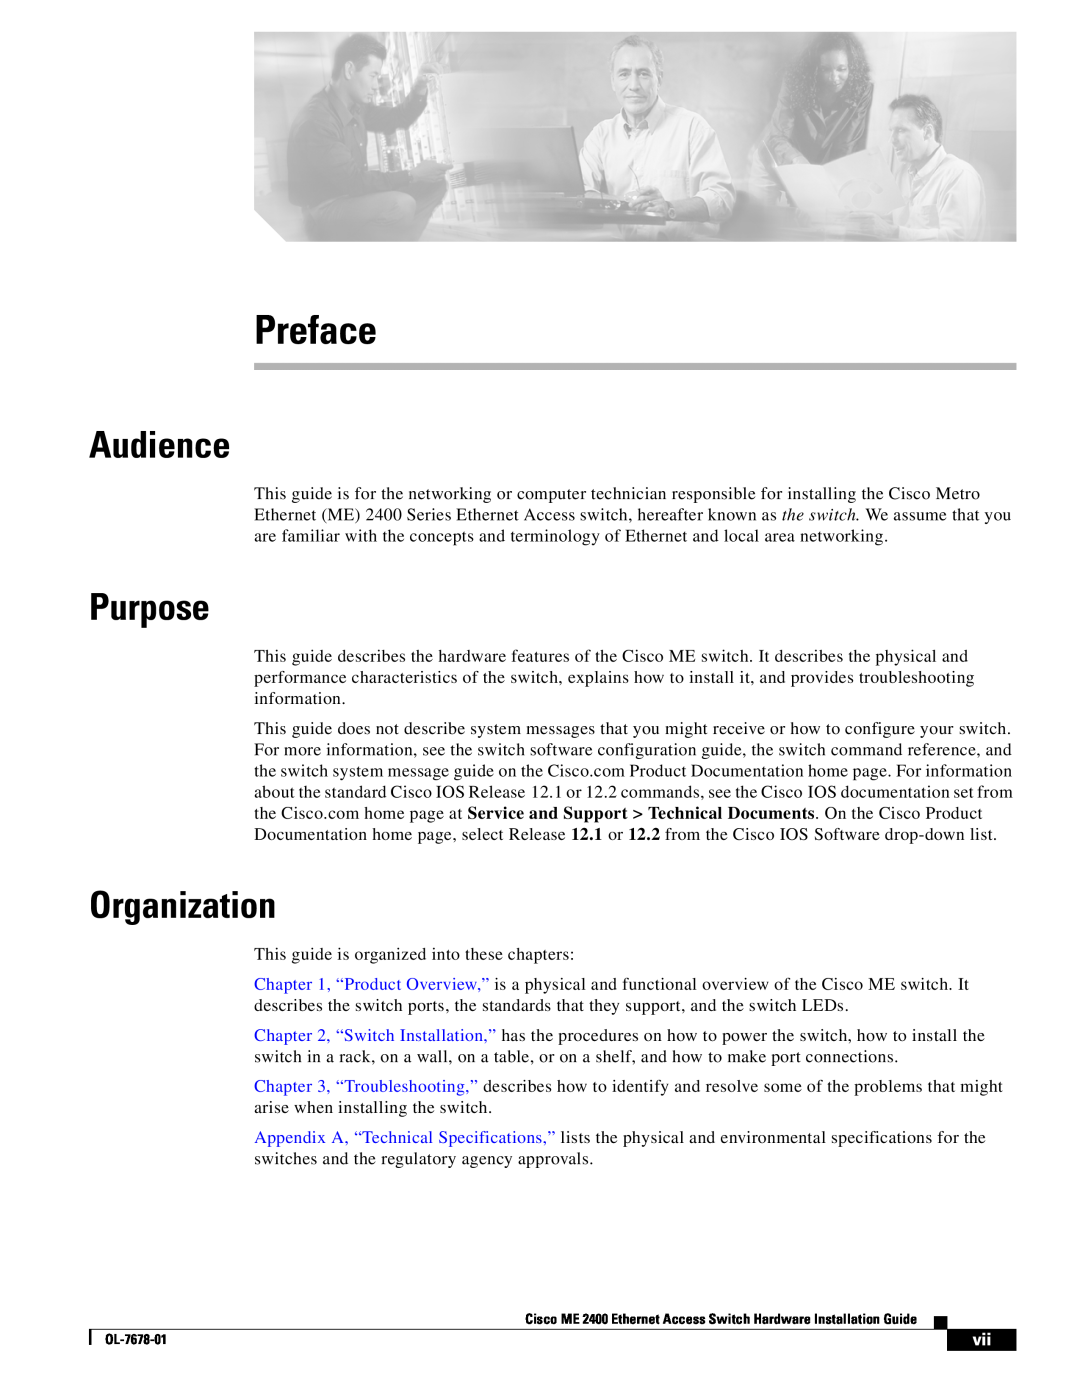 Cisco Systems ME 2400 manual Preface, Audience, Purpose, Organization 